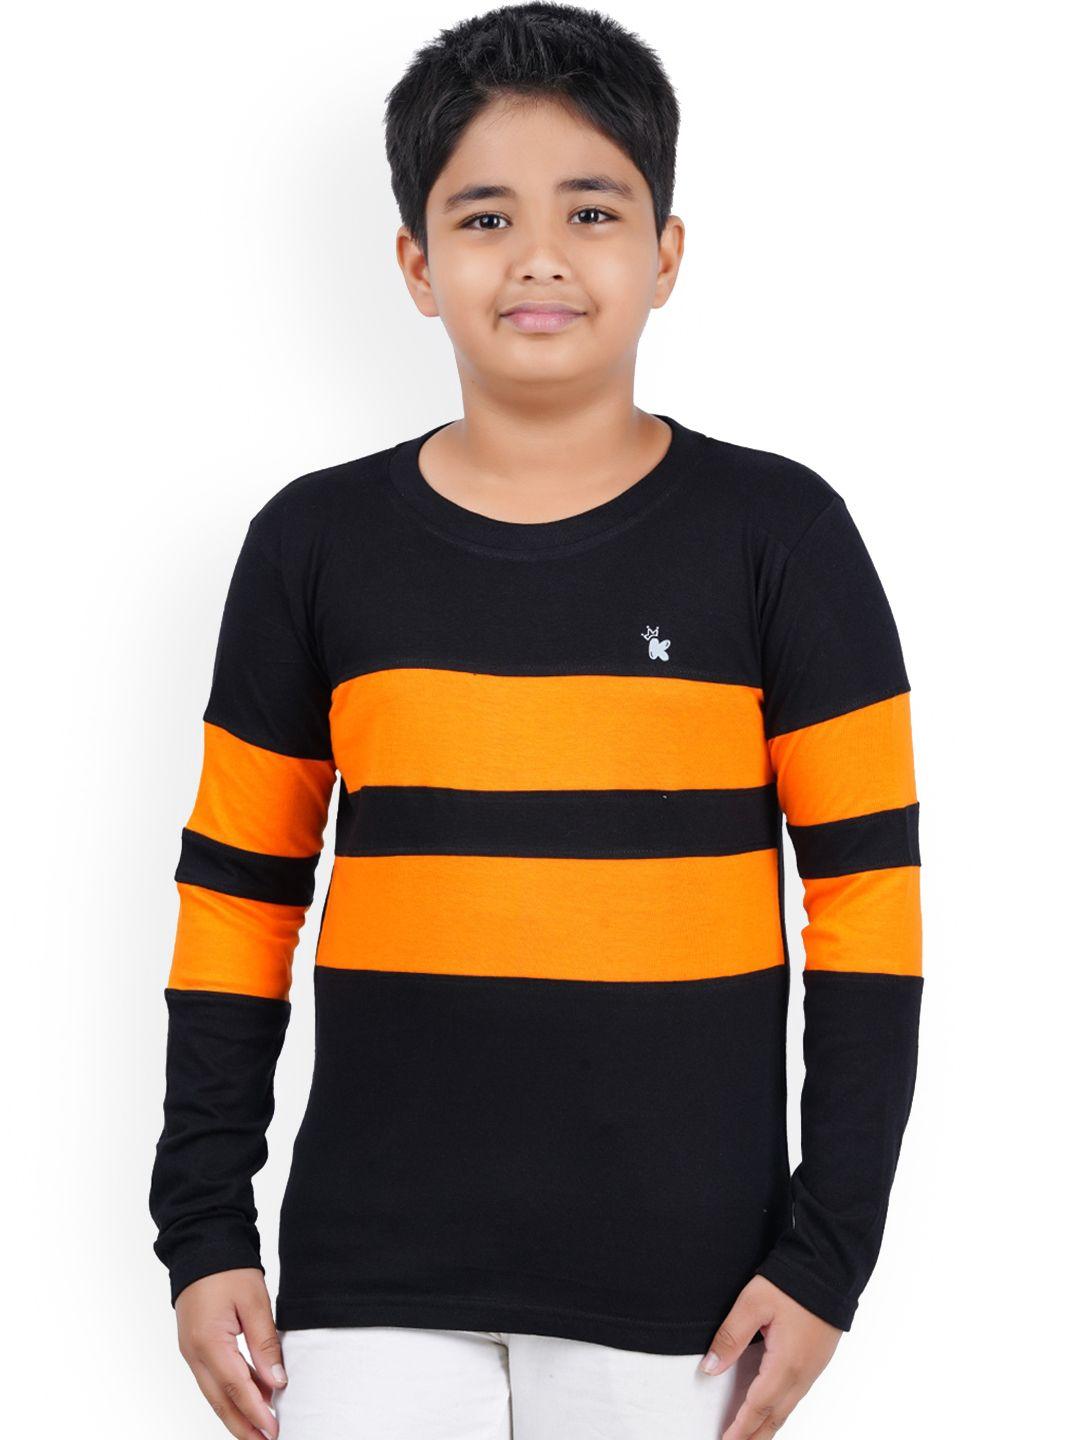 kiddeo boys black & orange striped round neck t-shirt